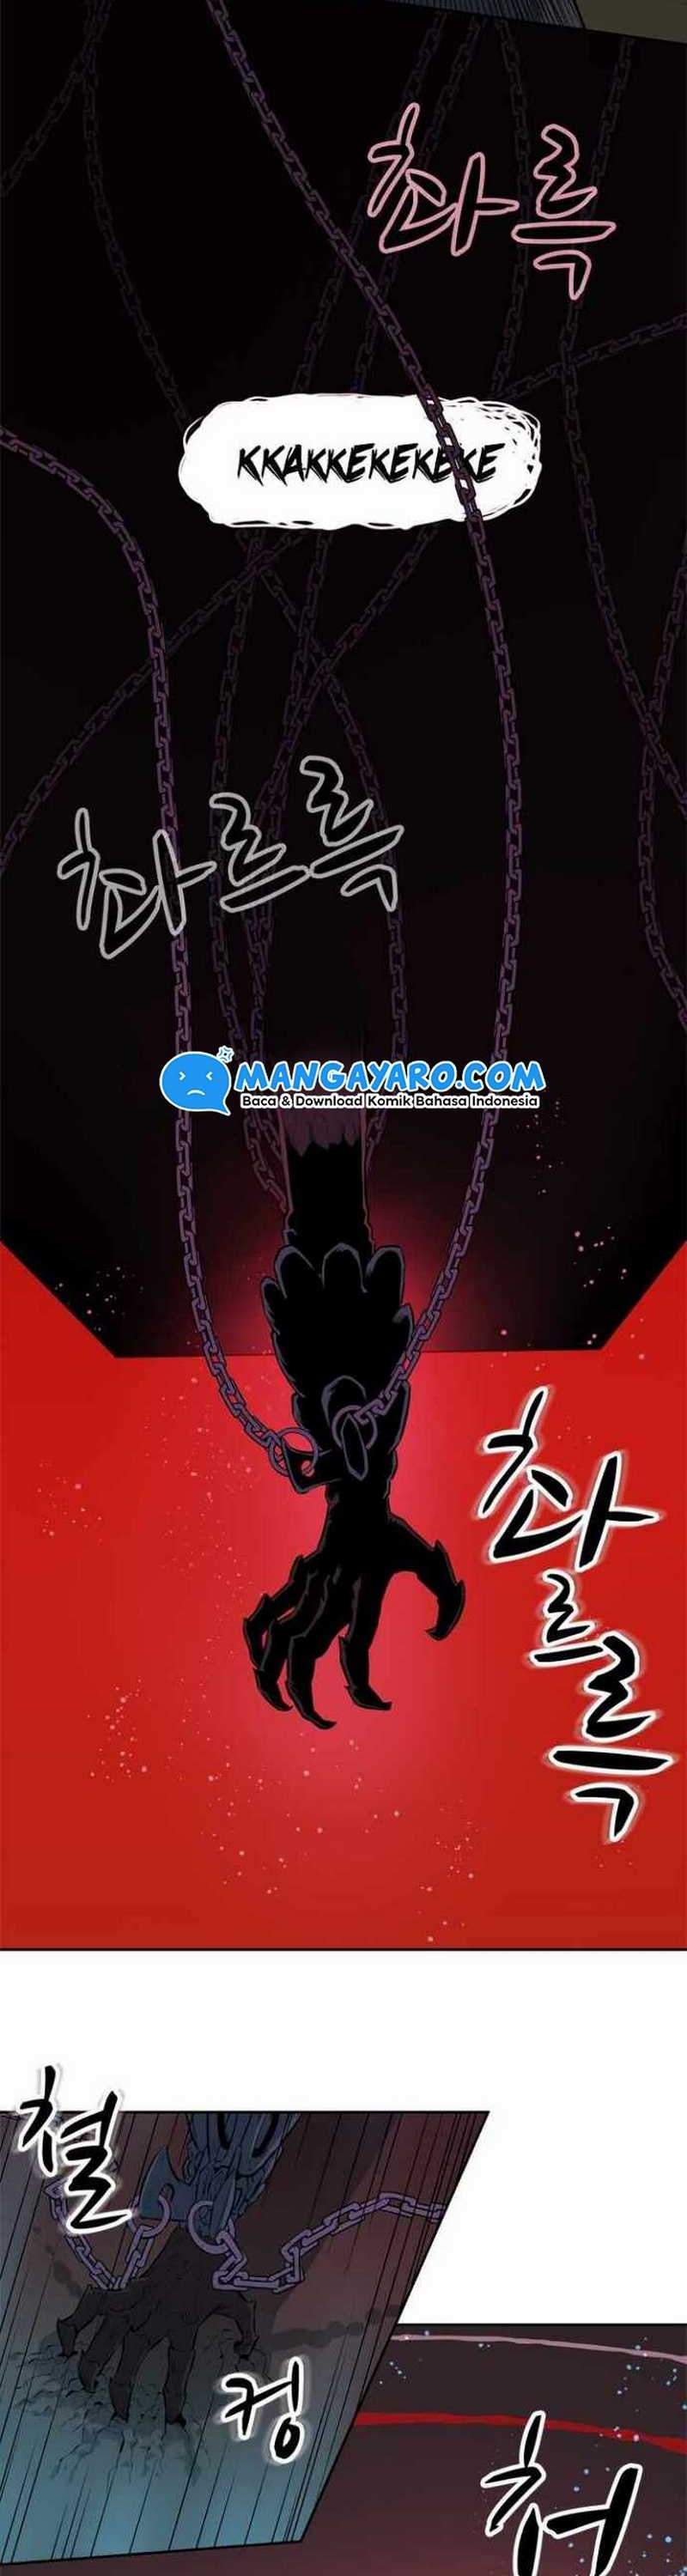 Rooftop Sword Master : Arachi The First Irregular Chapter 2